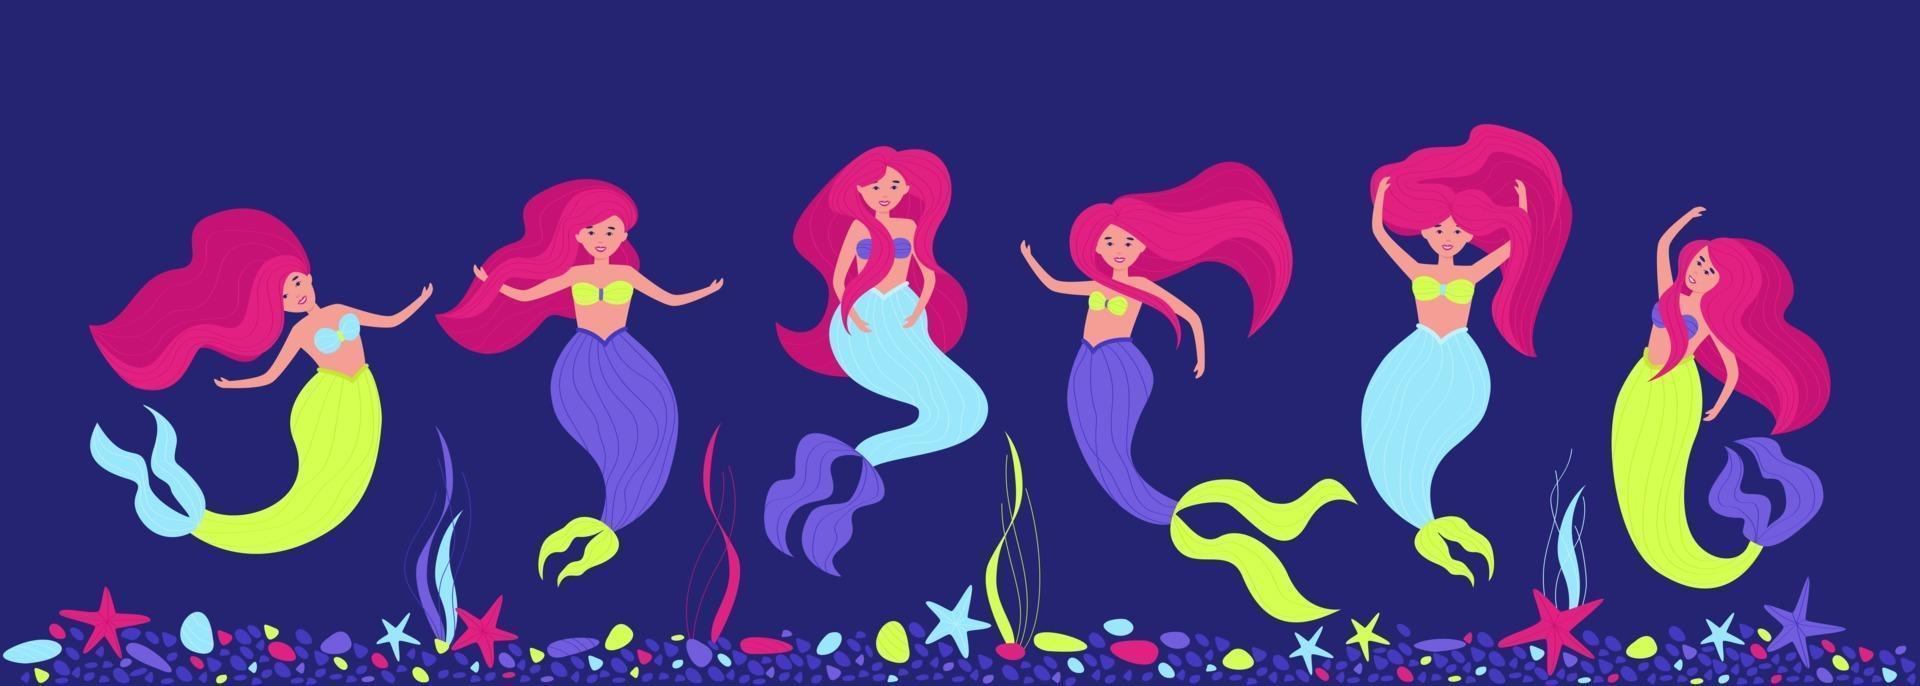 Set with neon mermaids on a dark background vector